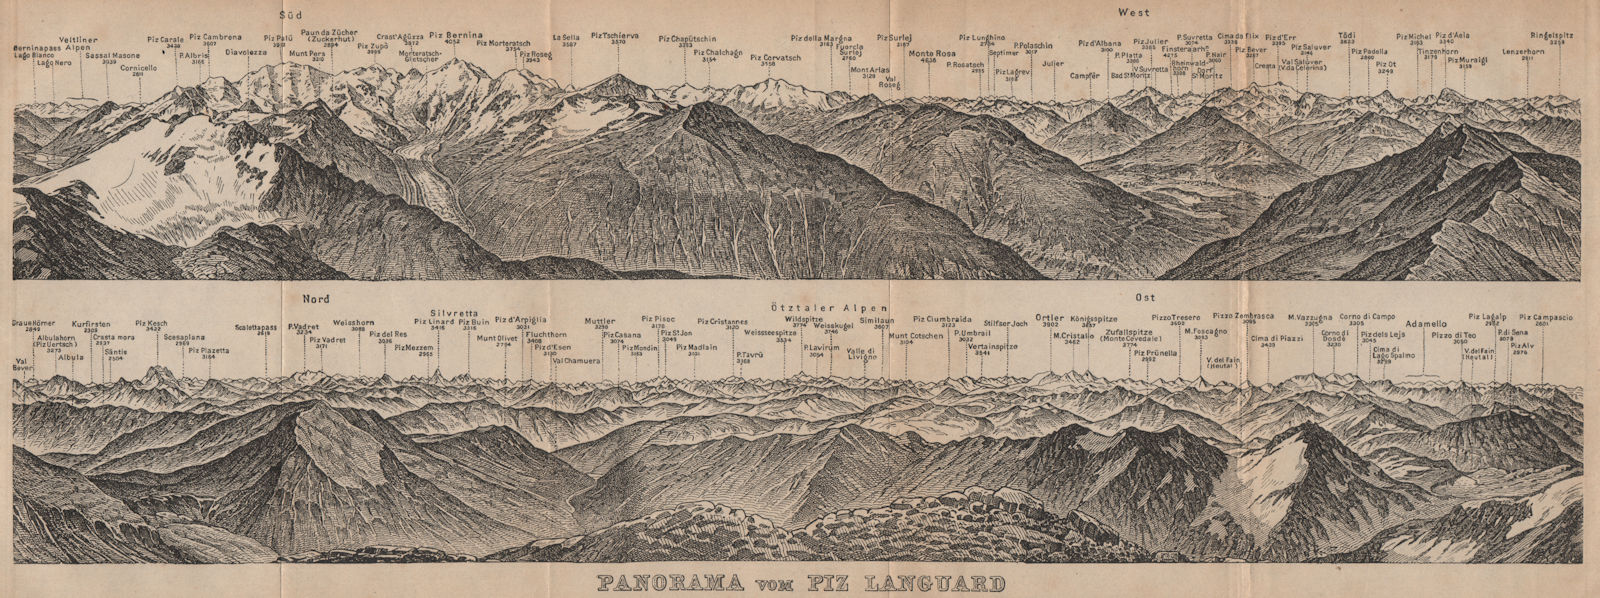 PIZ LANGUARD PANORAMA. Bernina Roseg Monte Rosa Mont Blanc Cristallo 1907 map